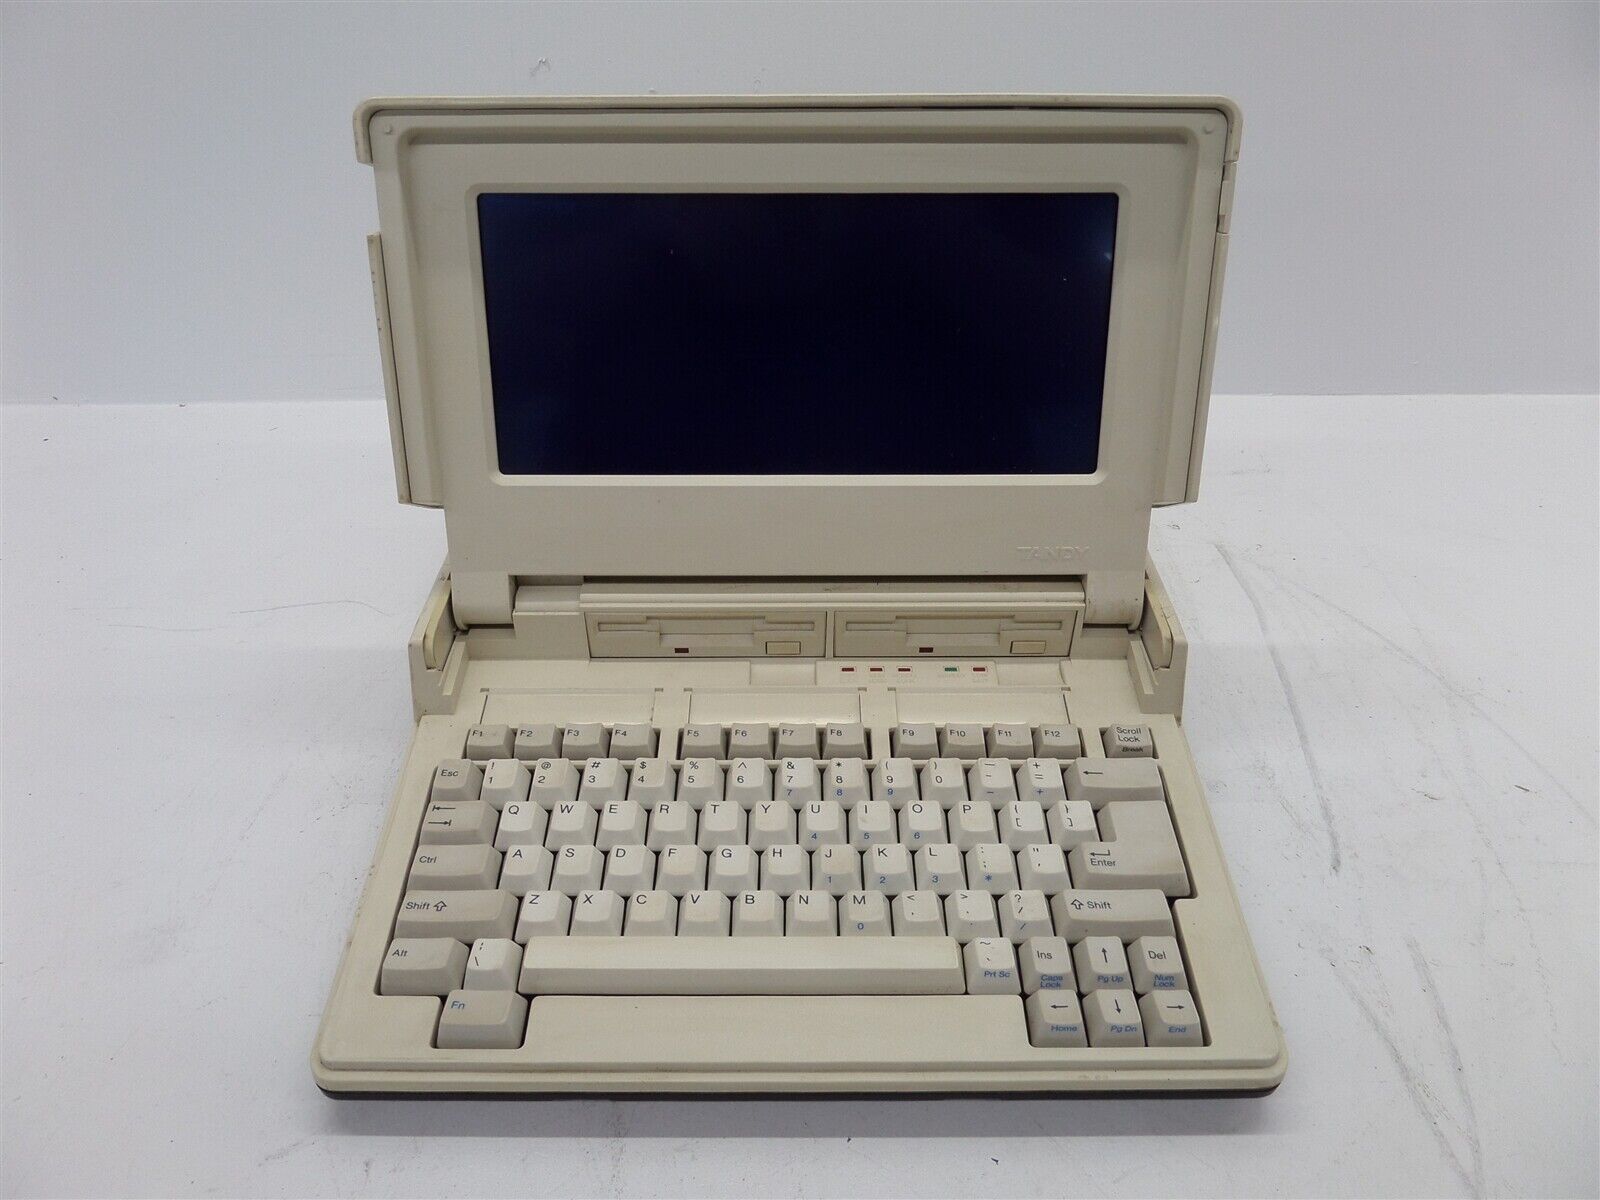 Vintage Tandy 1400 25-3500 Laptop Computer